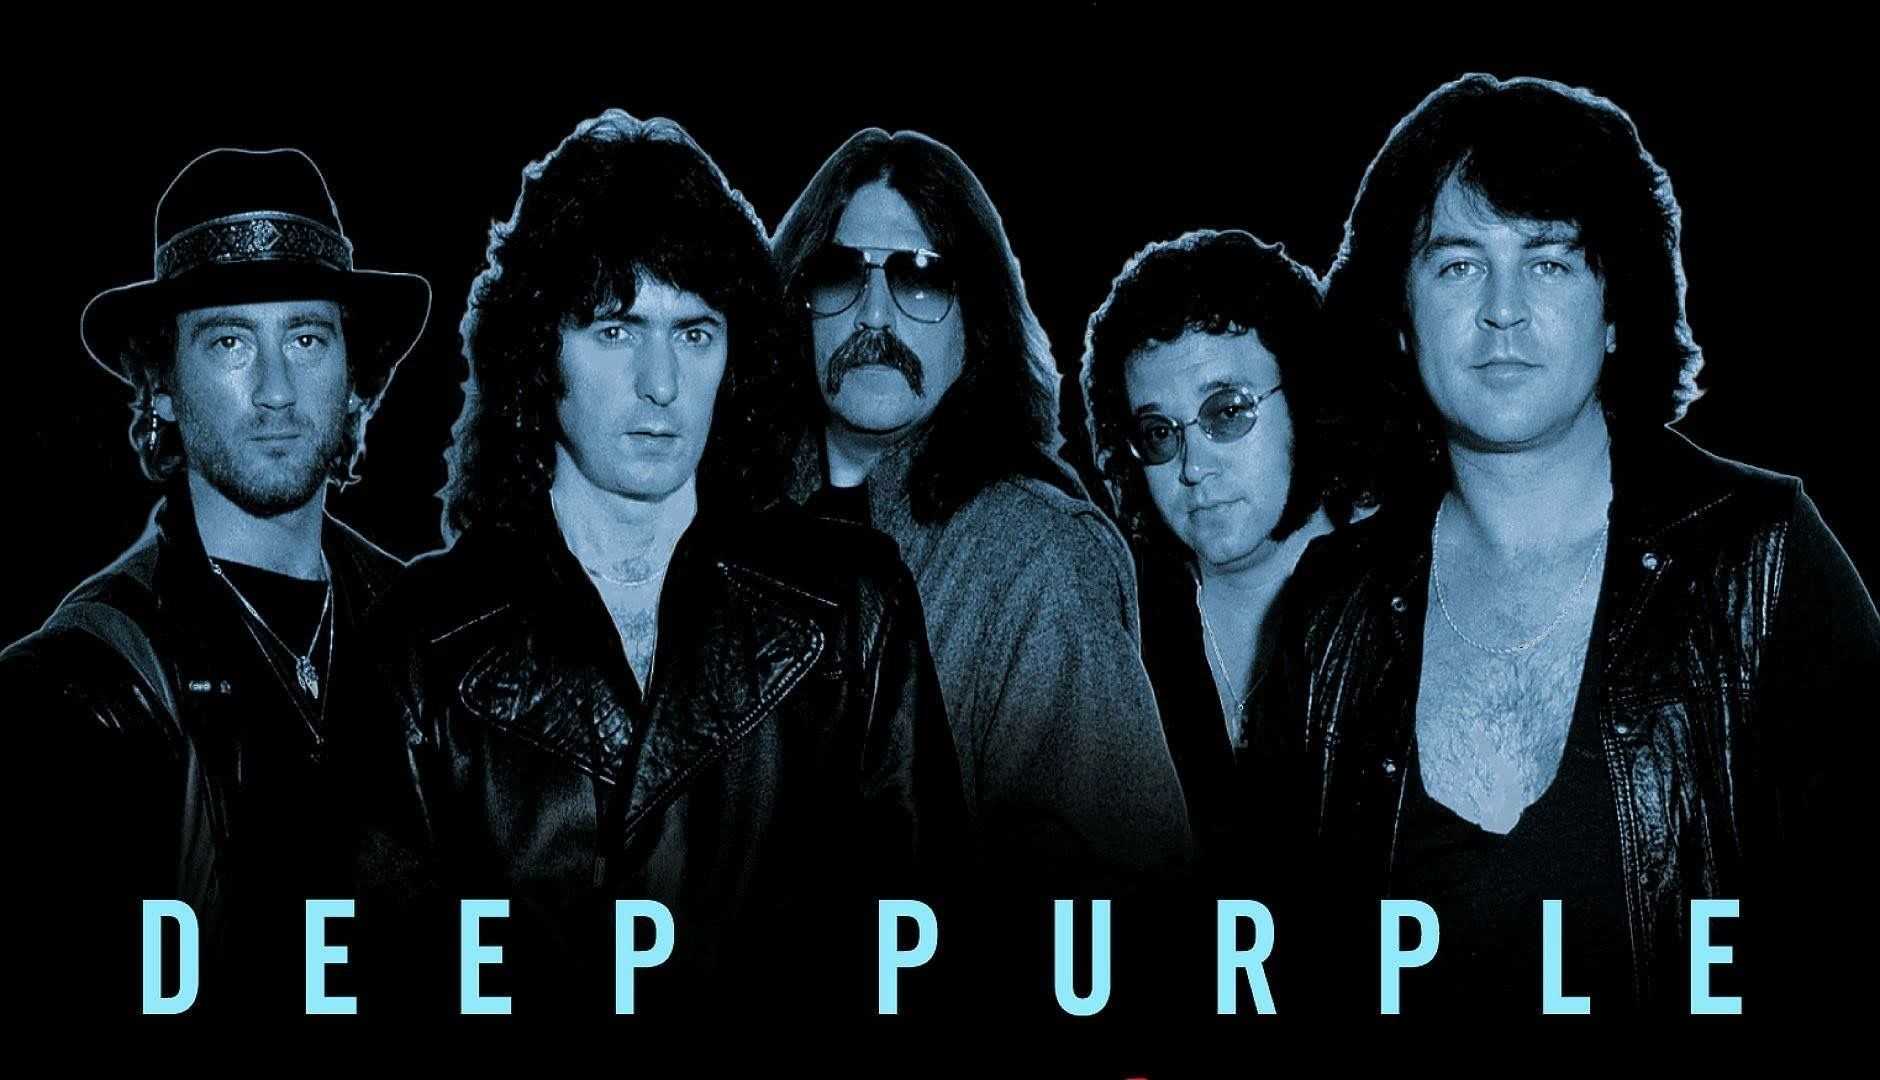 Deep purple - история группы, факты, фото